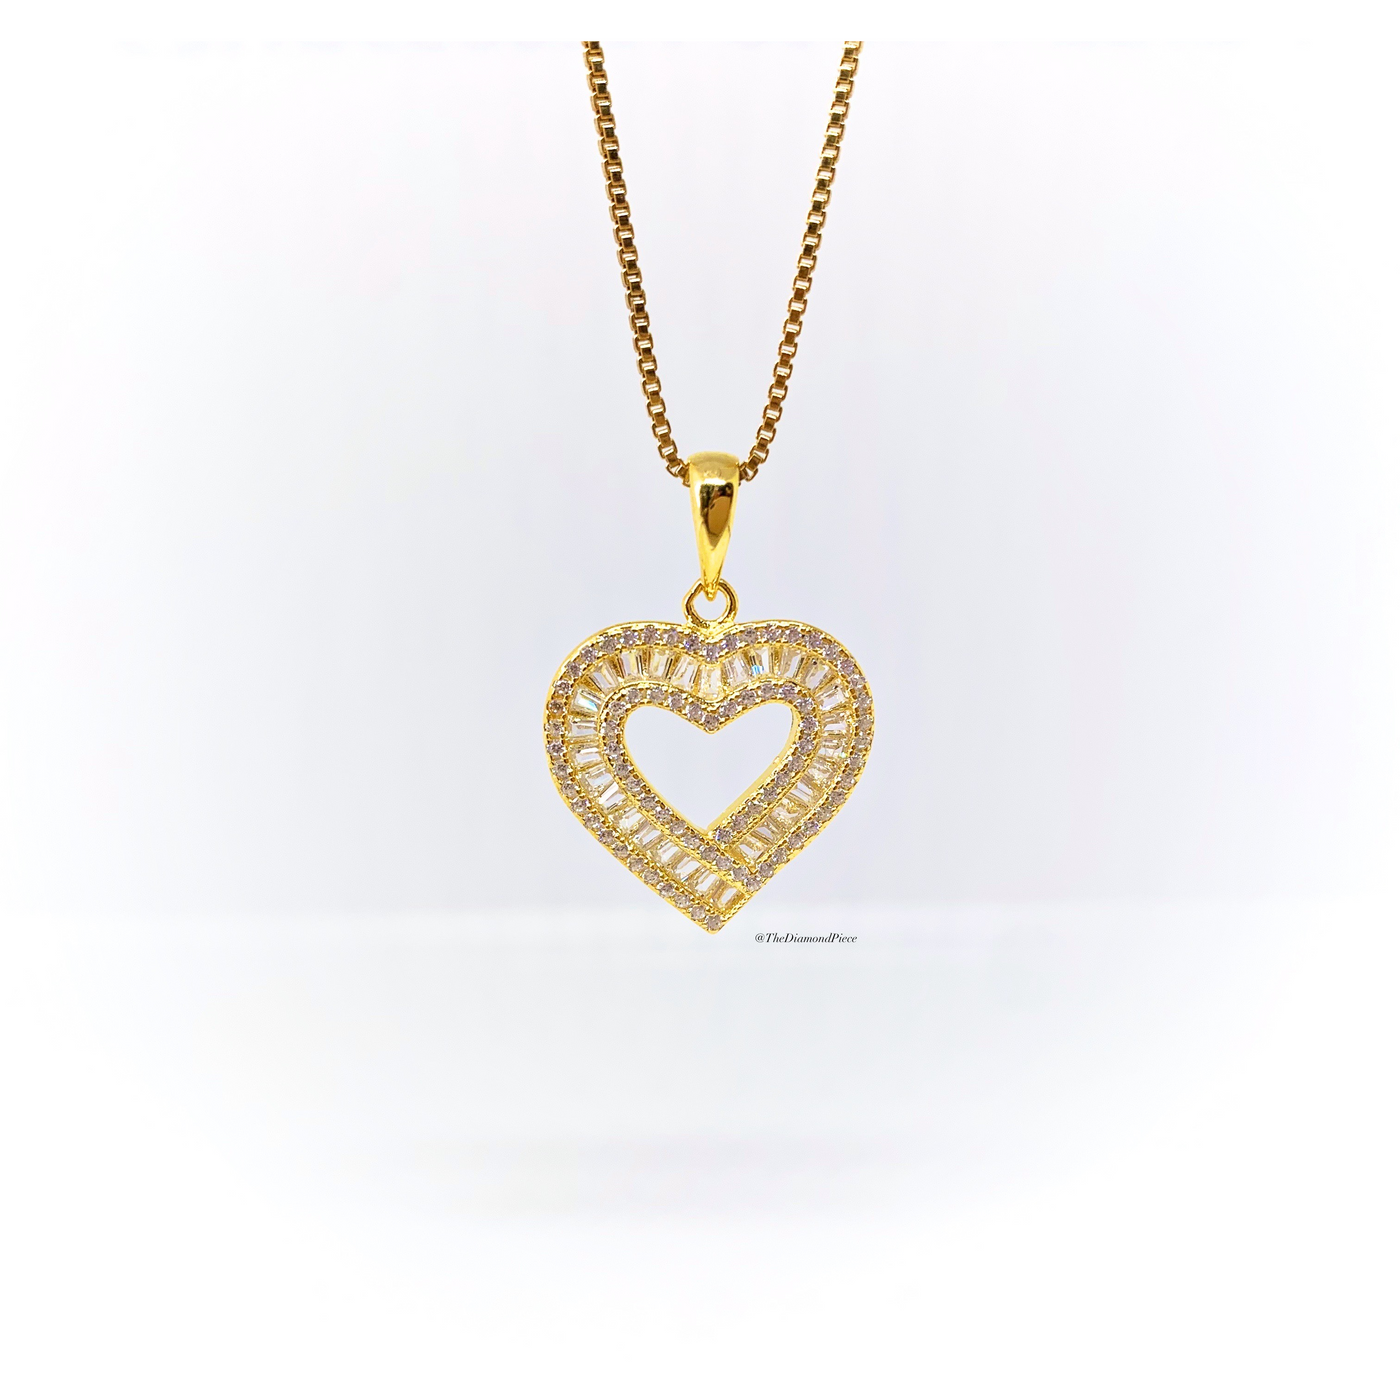 Sterling Silver Baguette Heart Necklace